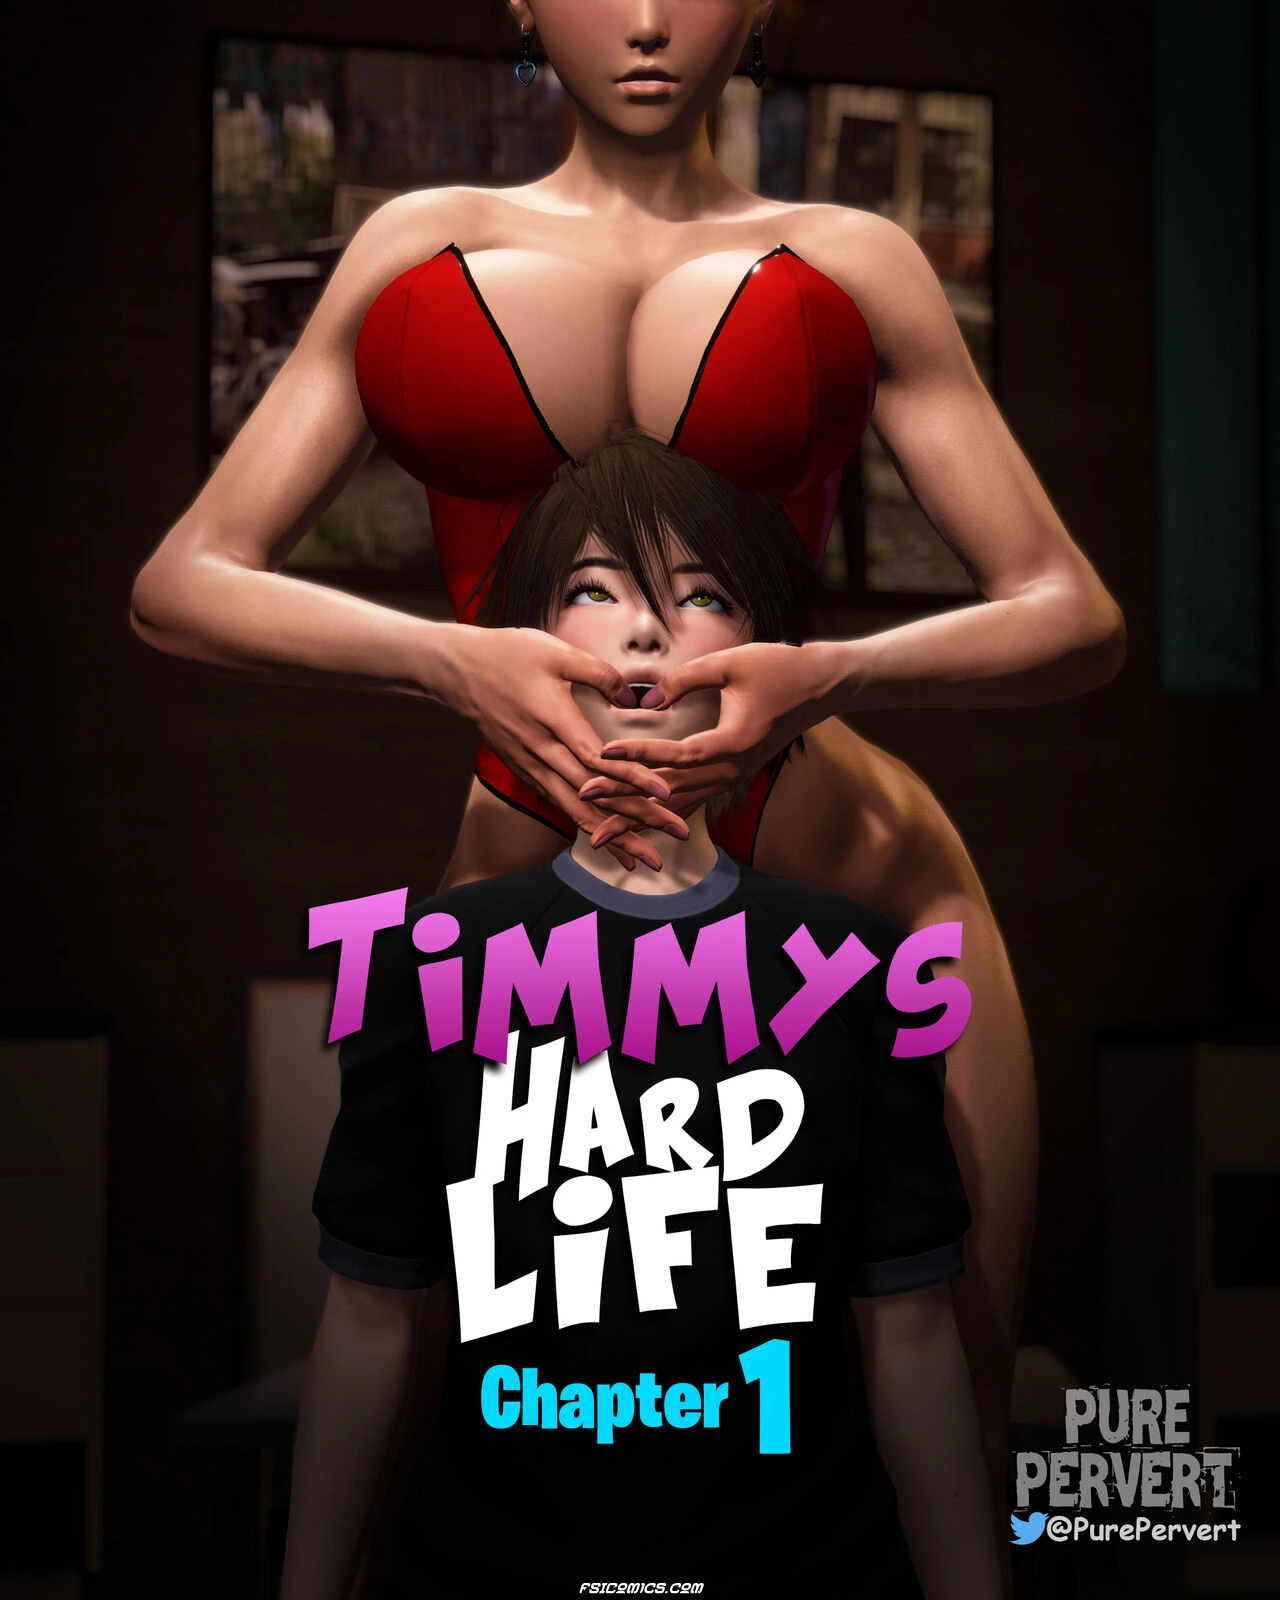 Timmy's Hard Life Chapter 1 - PurePervert - 11 - FSIComics